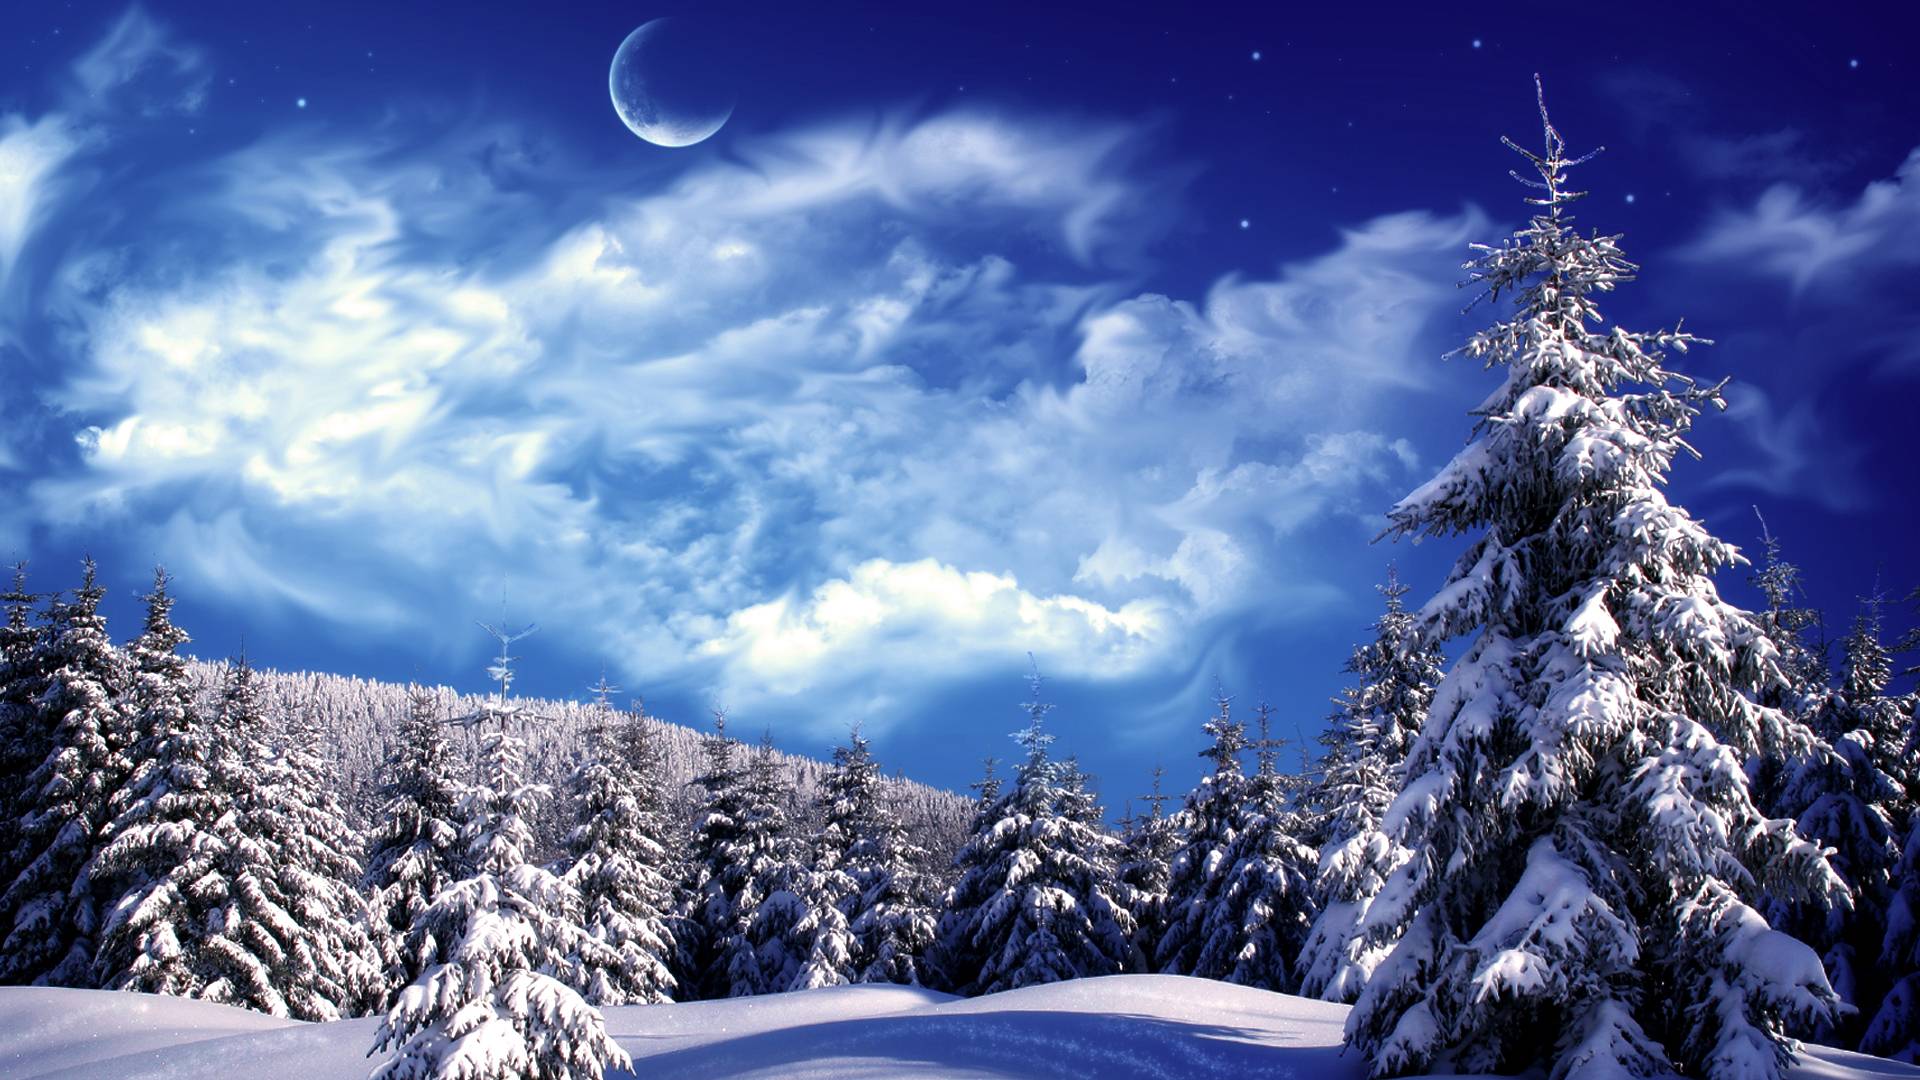 Winter Wonderland Wallpapers - Top Free Winter Wonderland Backgrounds